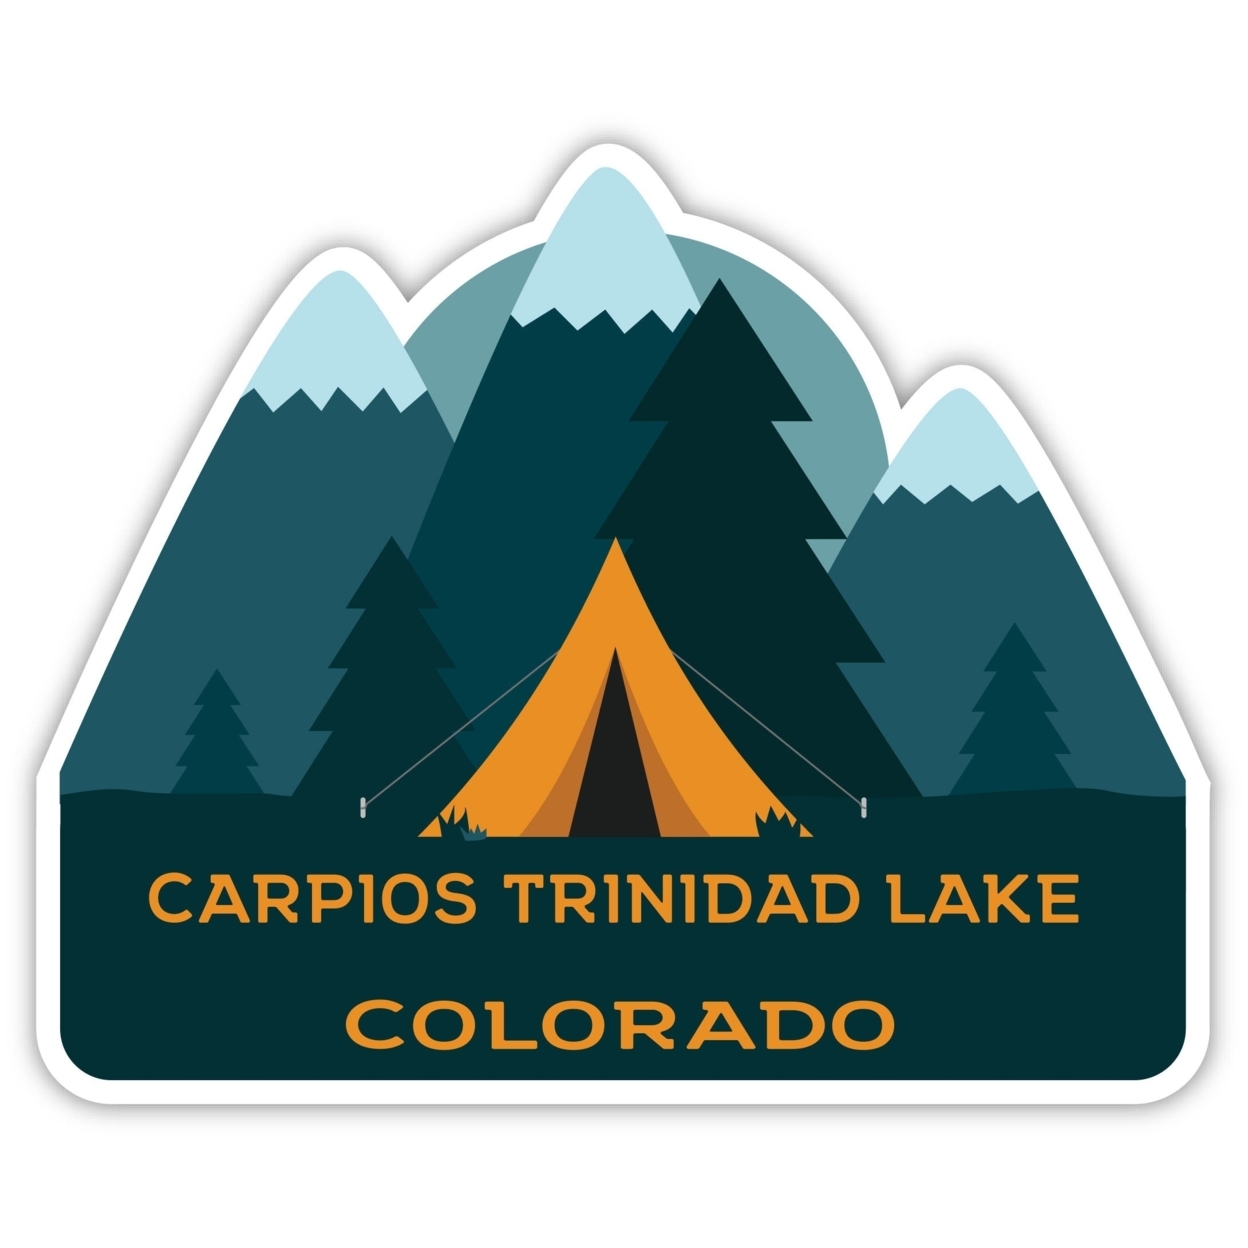 Carpios Trinidad Lake Colorado Souvenir Decorative Stickers (Choose Theme And Size) - 4-Pack, 6-Inch, Bear